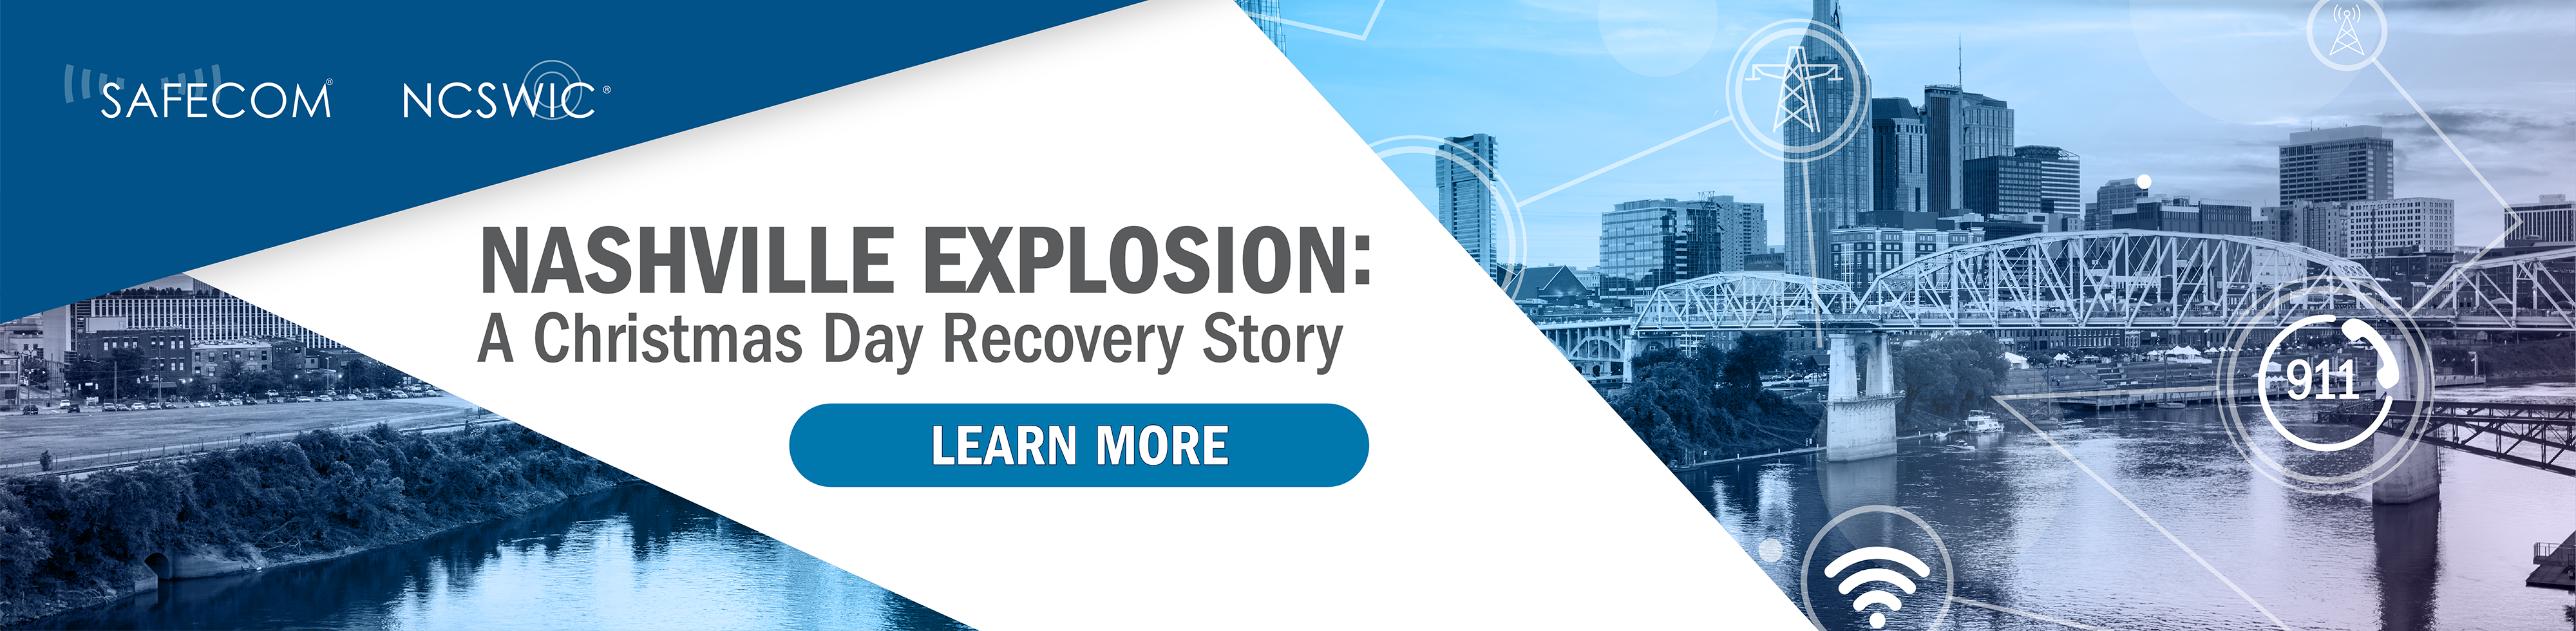 Nashville Explosion Recovery Story